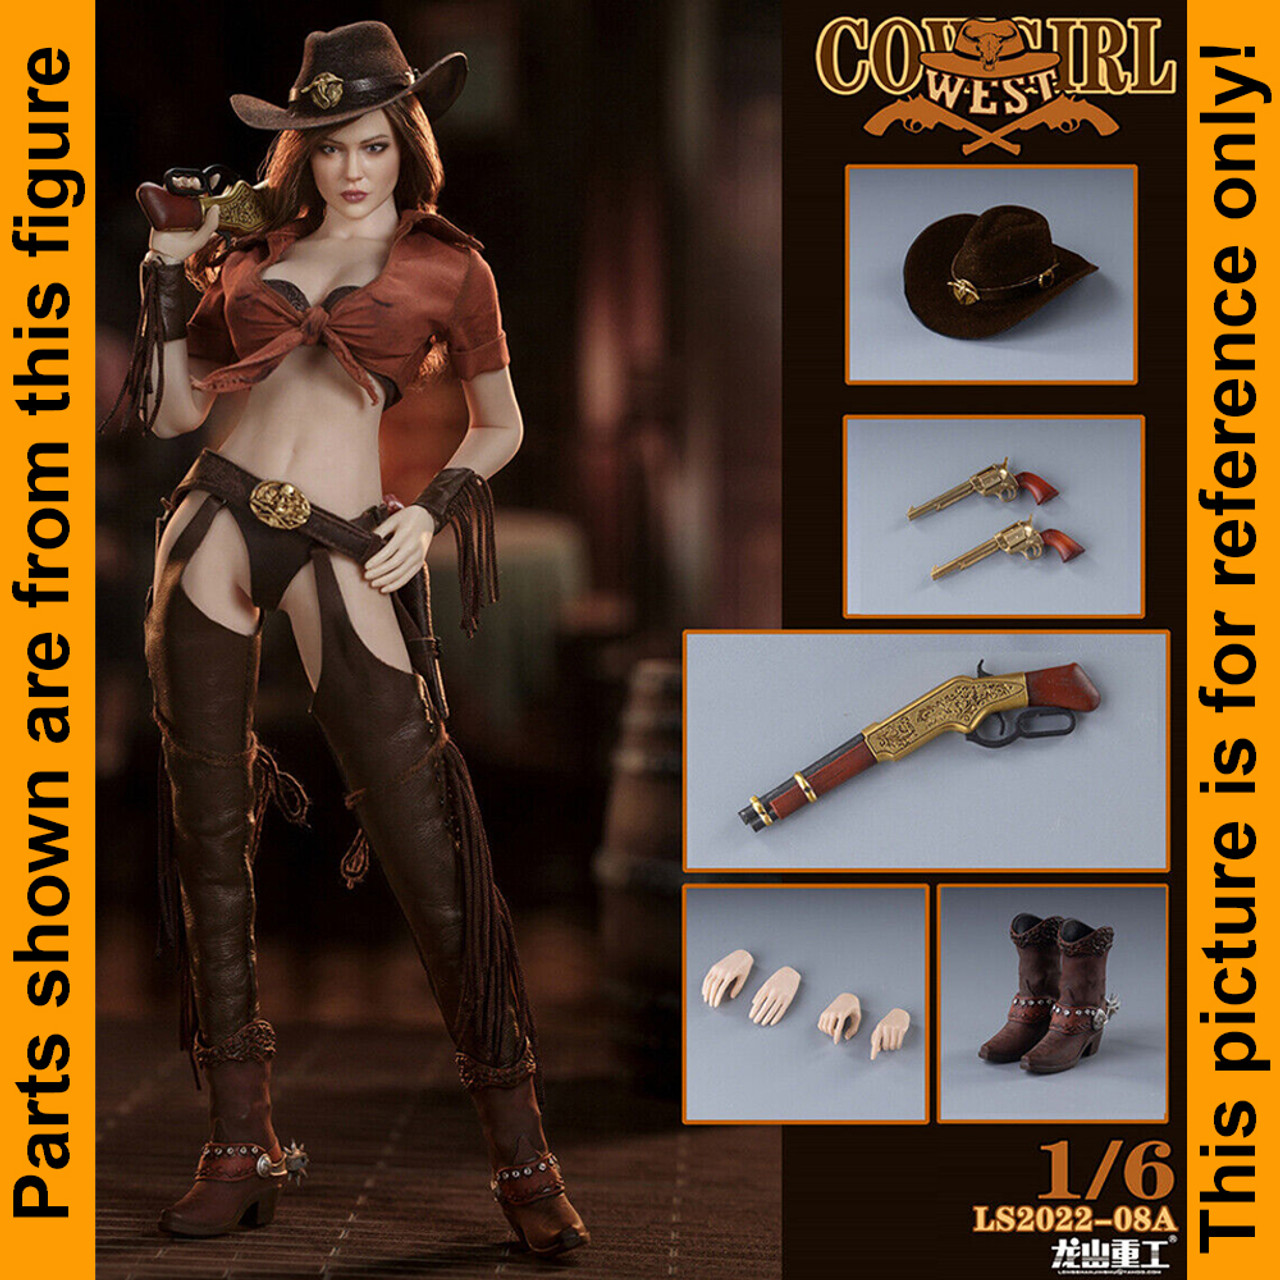 Western Cowgirl A - Brown Cowboy Hat - 1/6 Scale -